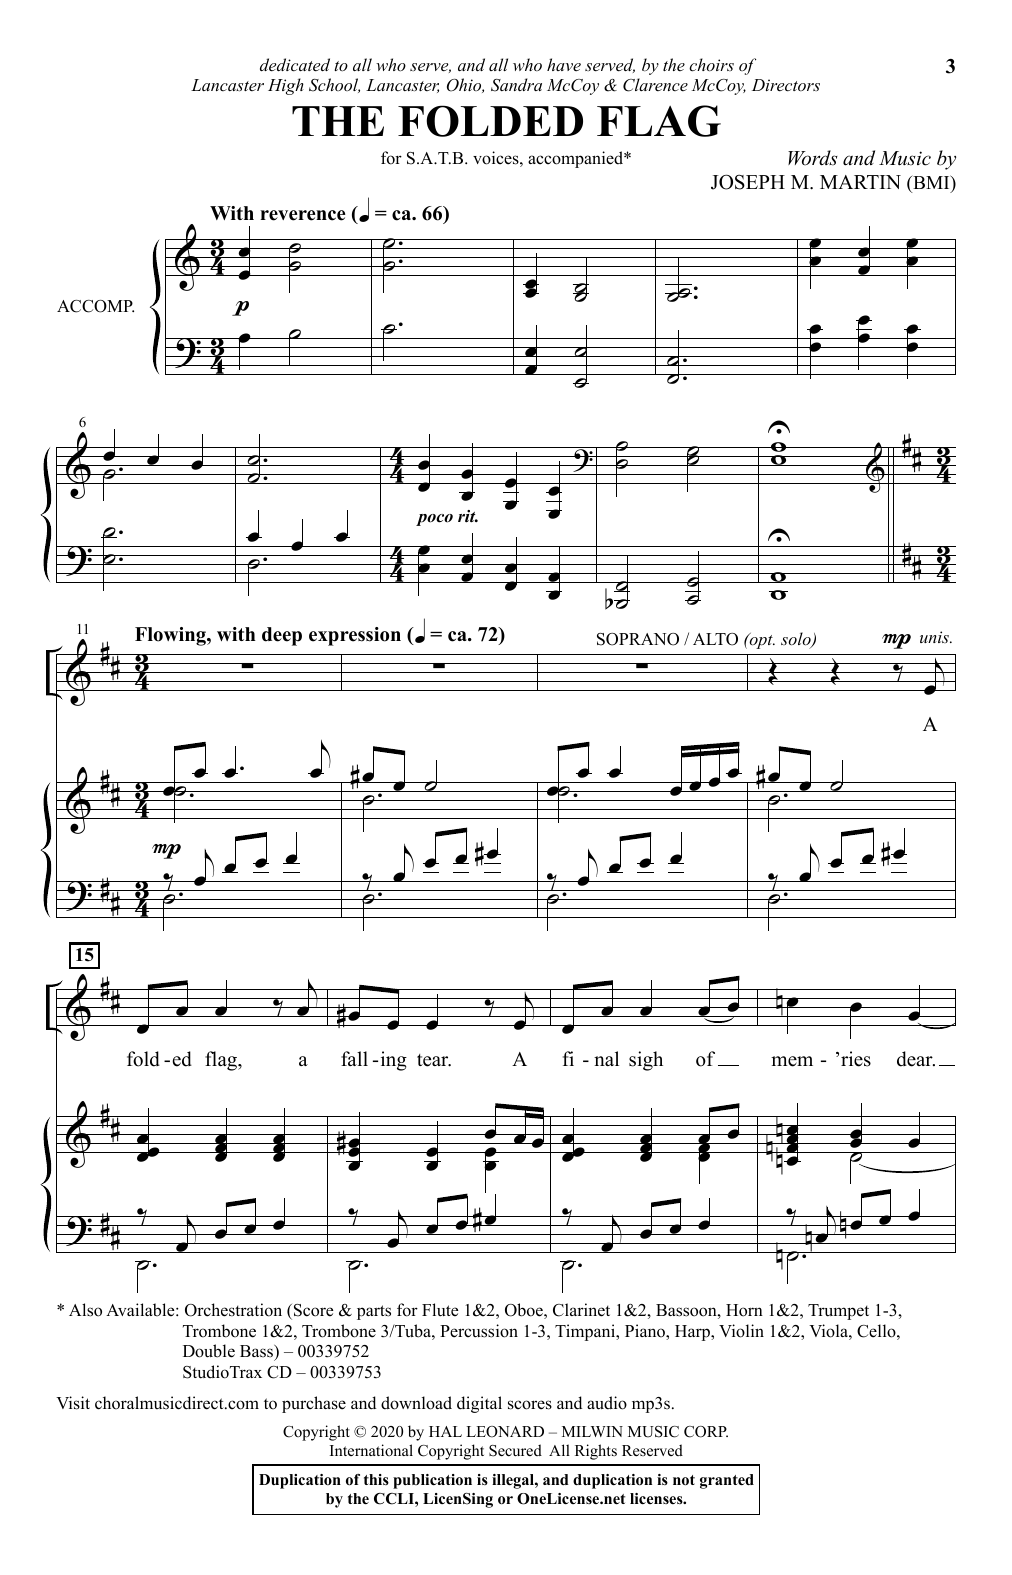 Joseph M. Martin The Folded Flag Sheet Music Notes & Chords for TTBB Choir - Download or Print PDF